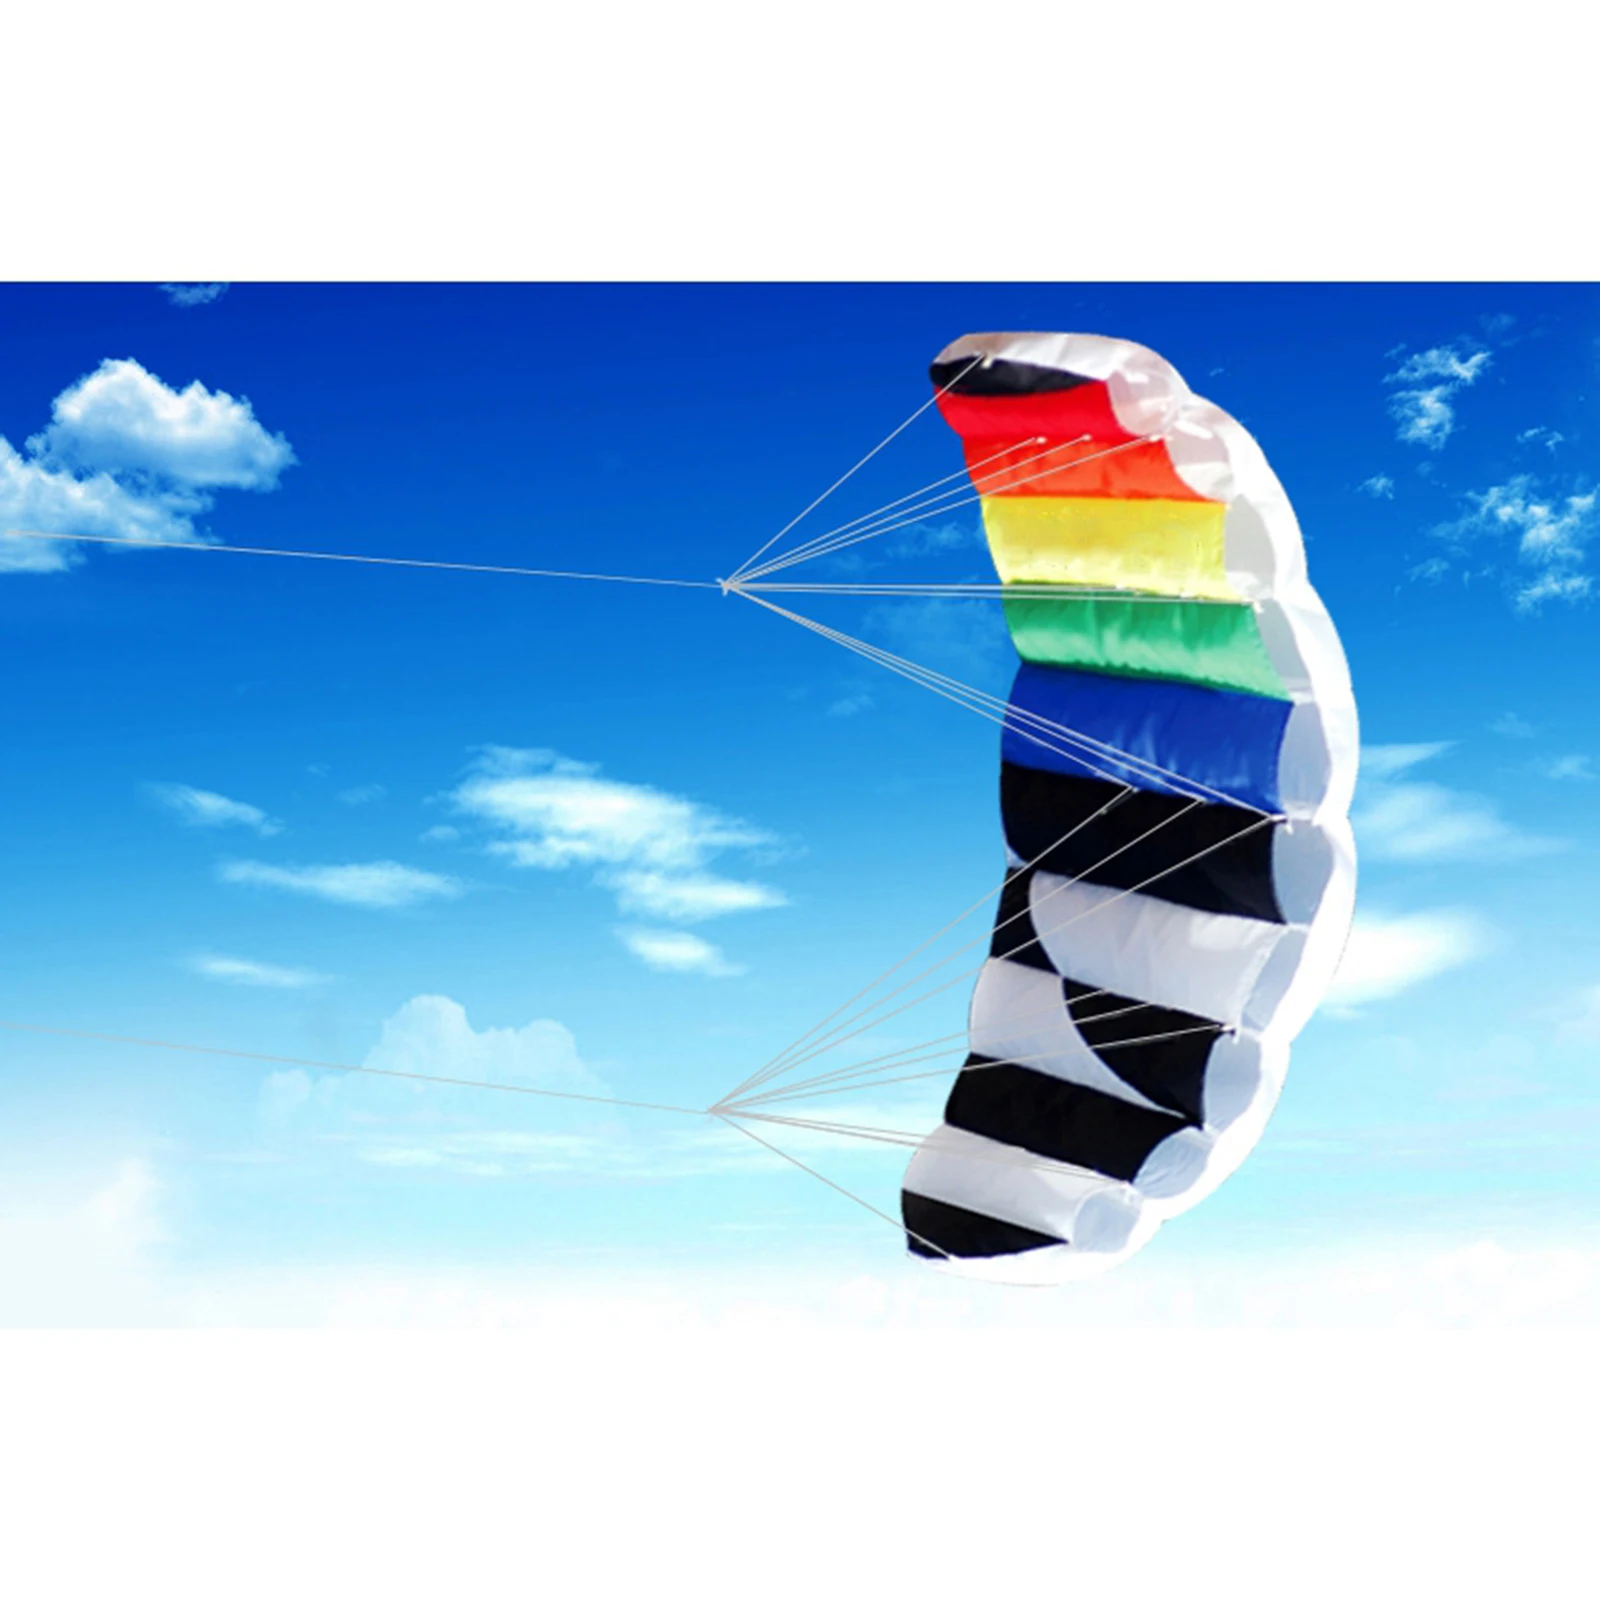 Stunt Power Kite Surfboard Dual Line Wing Parafoil Sommer Fallschirm Spielzeug 